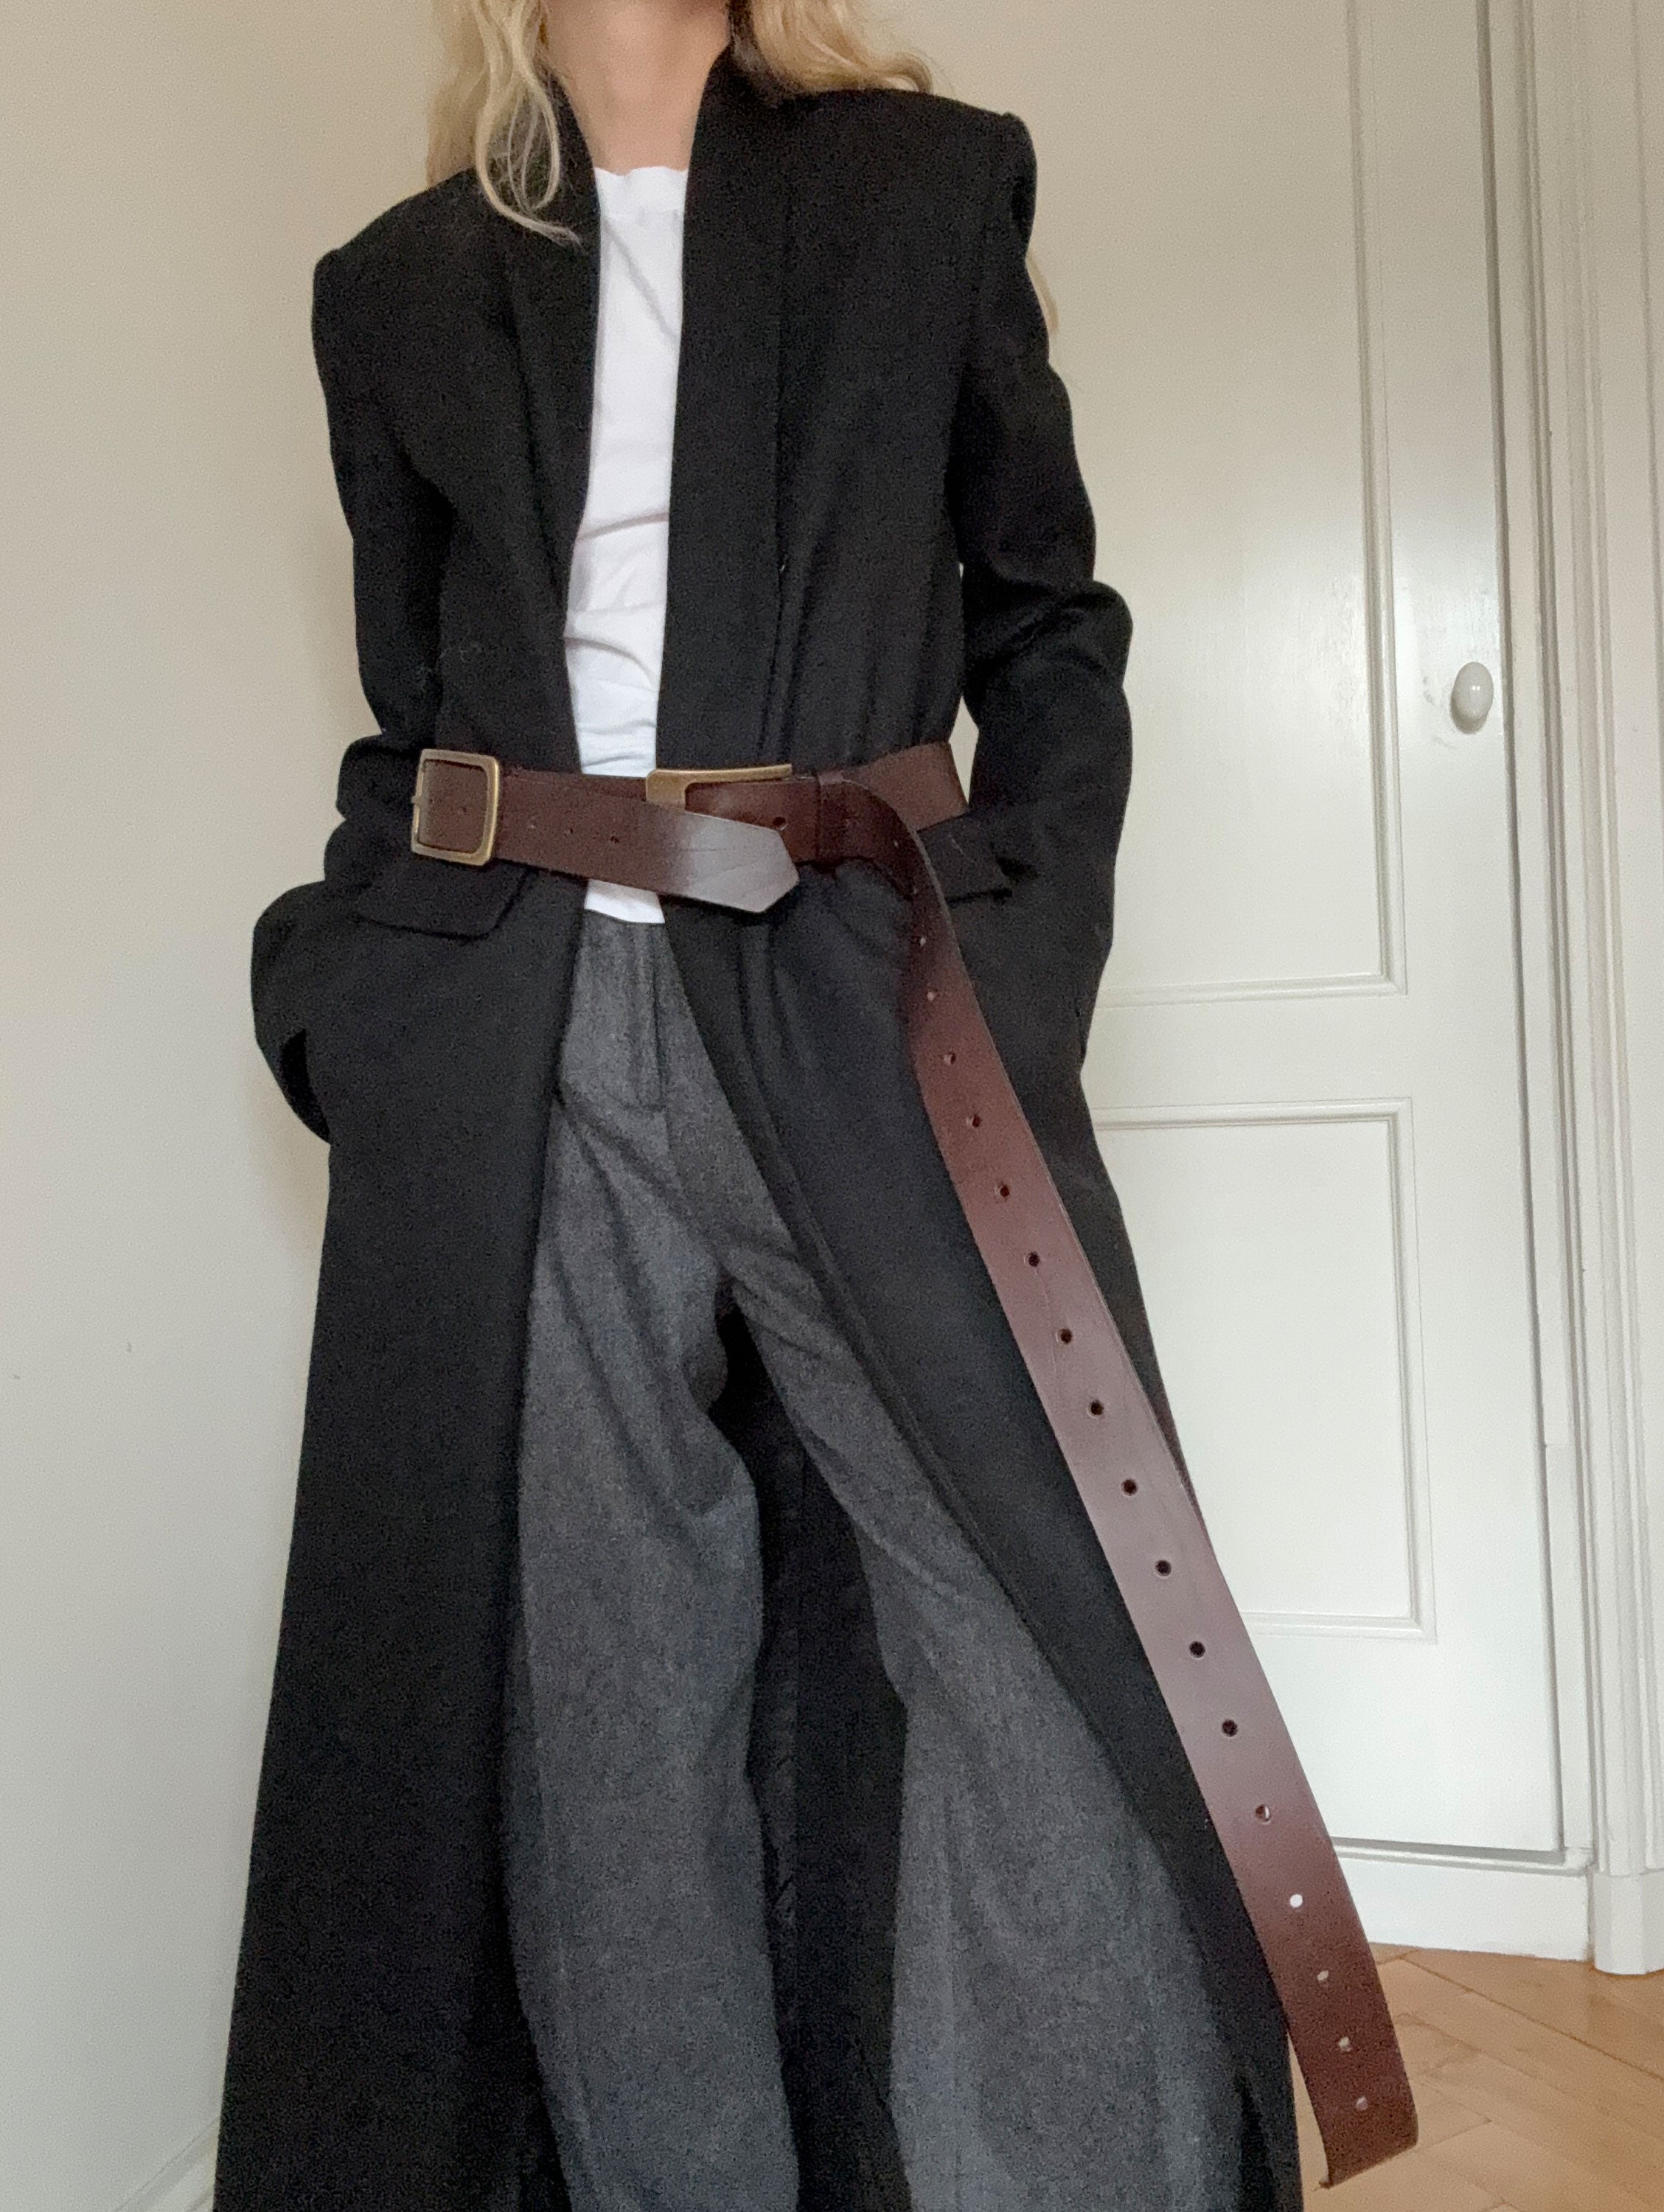 Brown leather sword belt